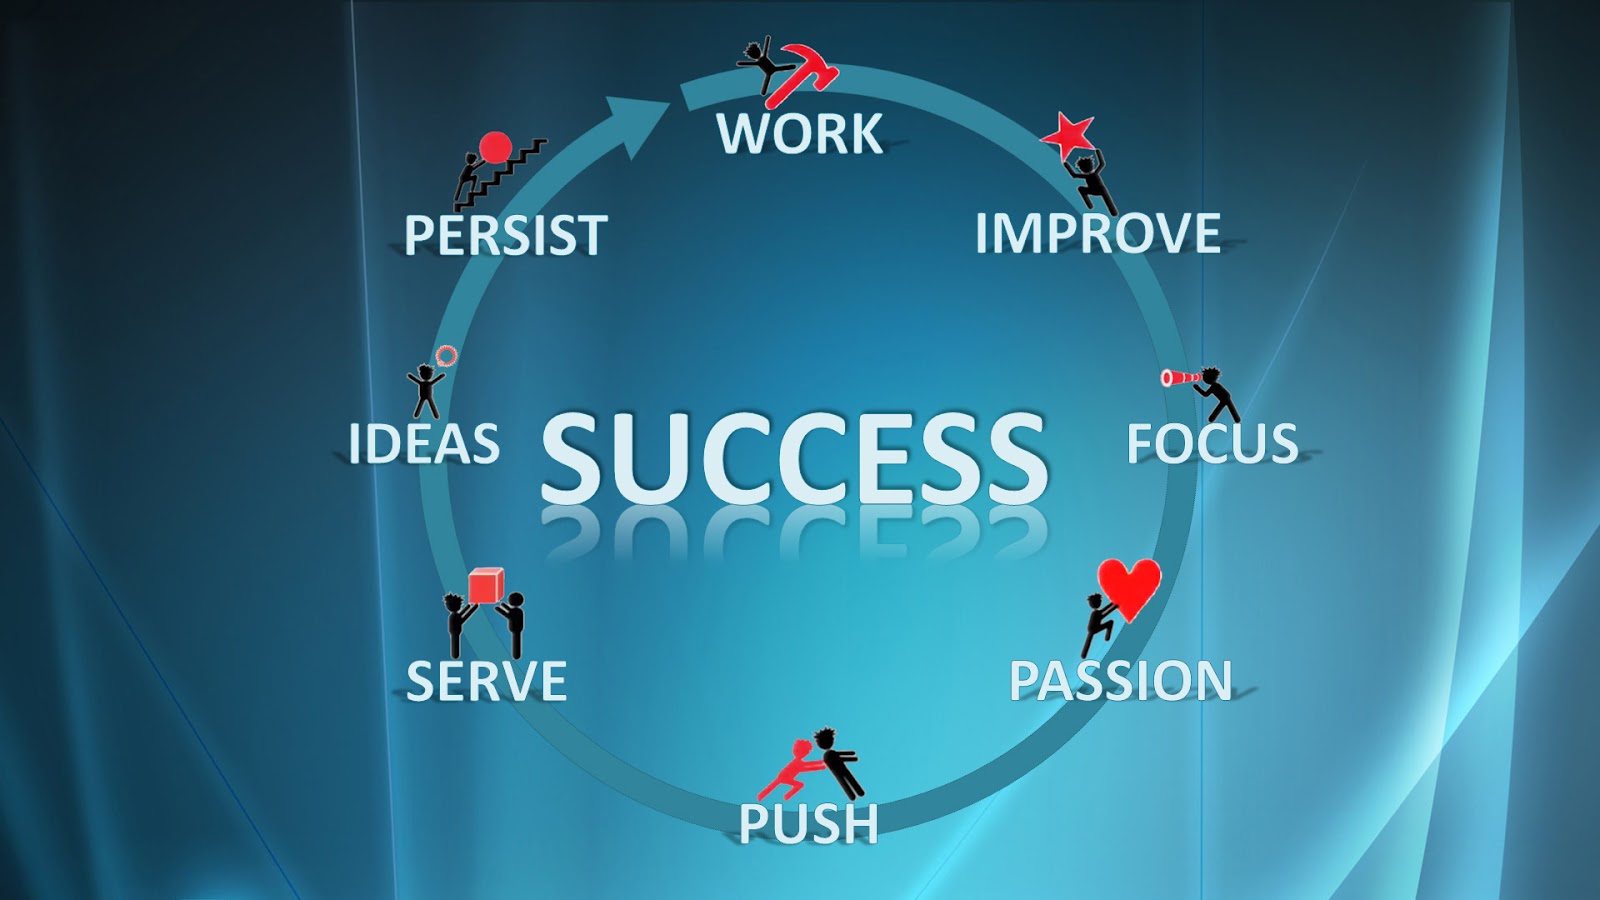 Mjasiriamali-The Entrepreneur: SUCCESS SECRETS